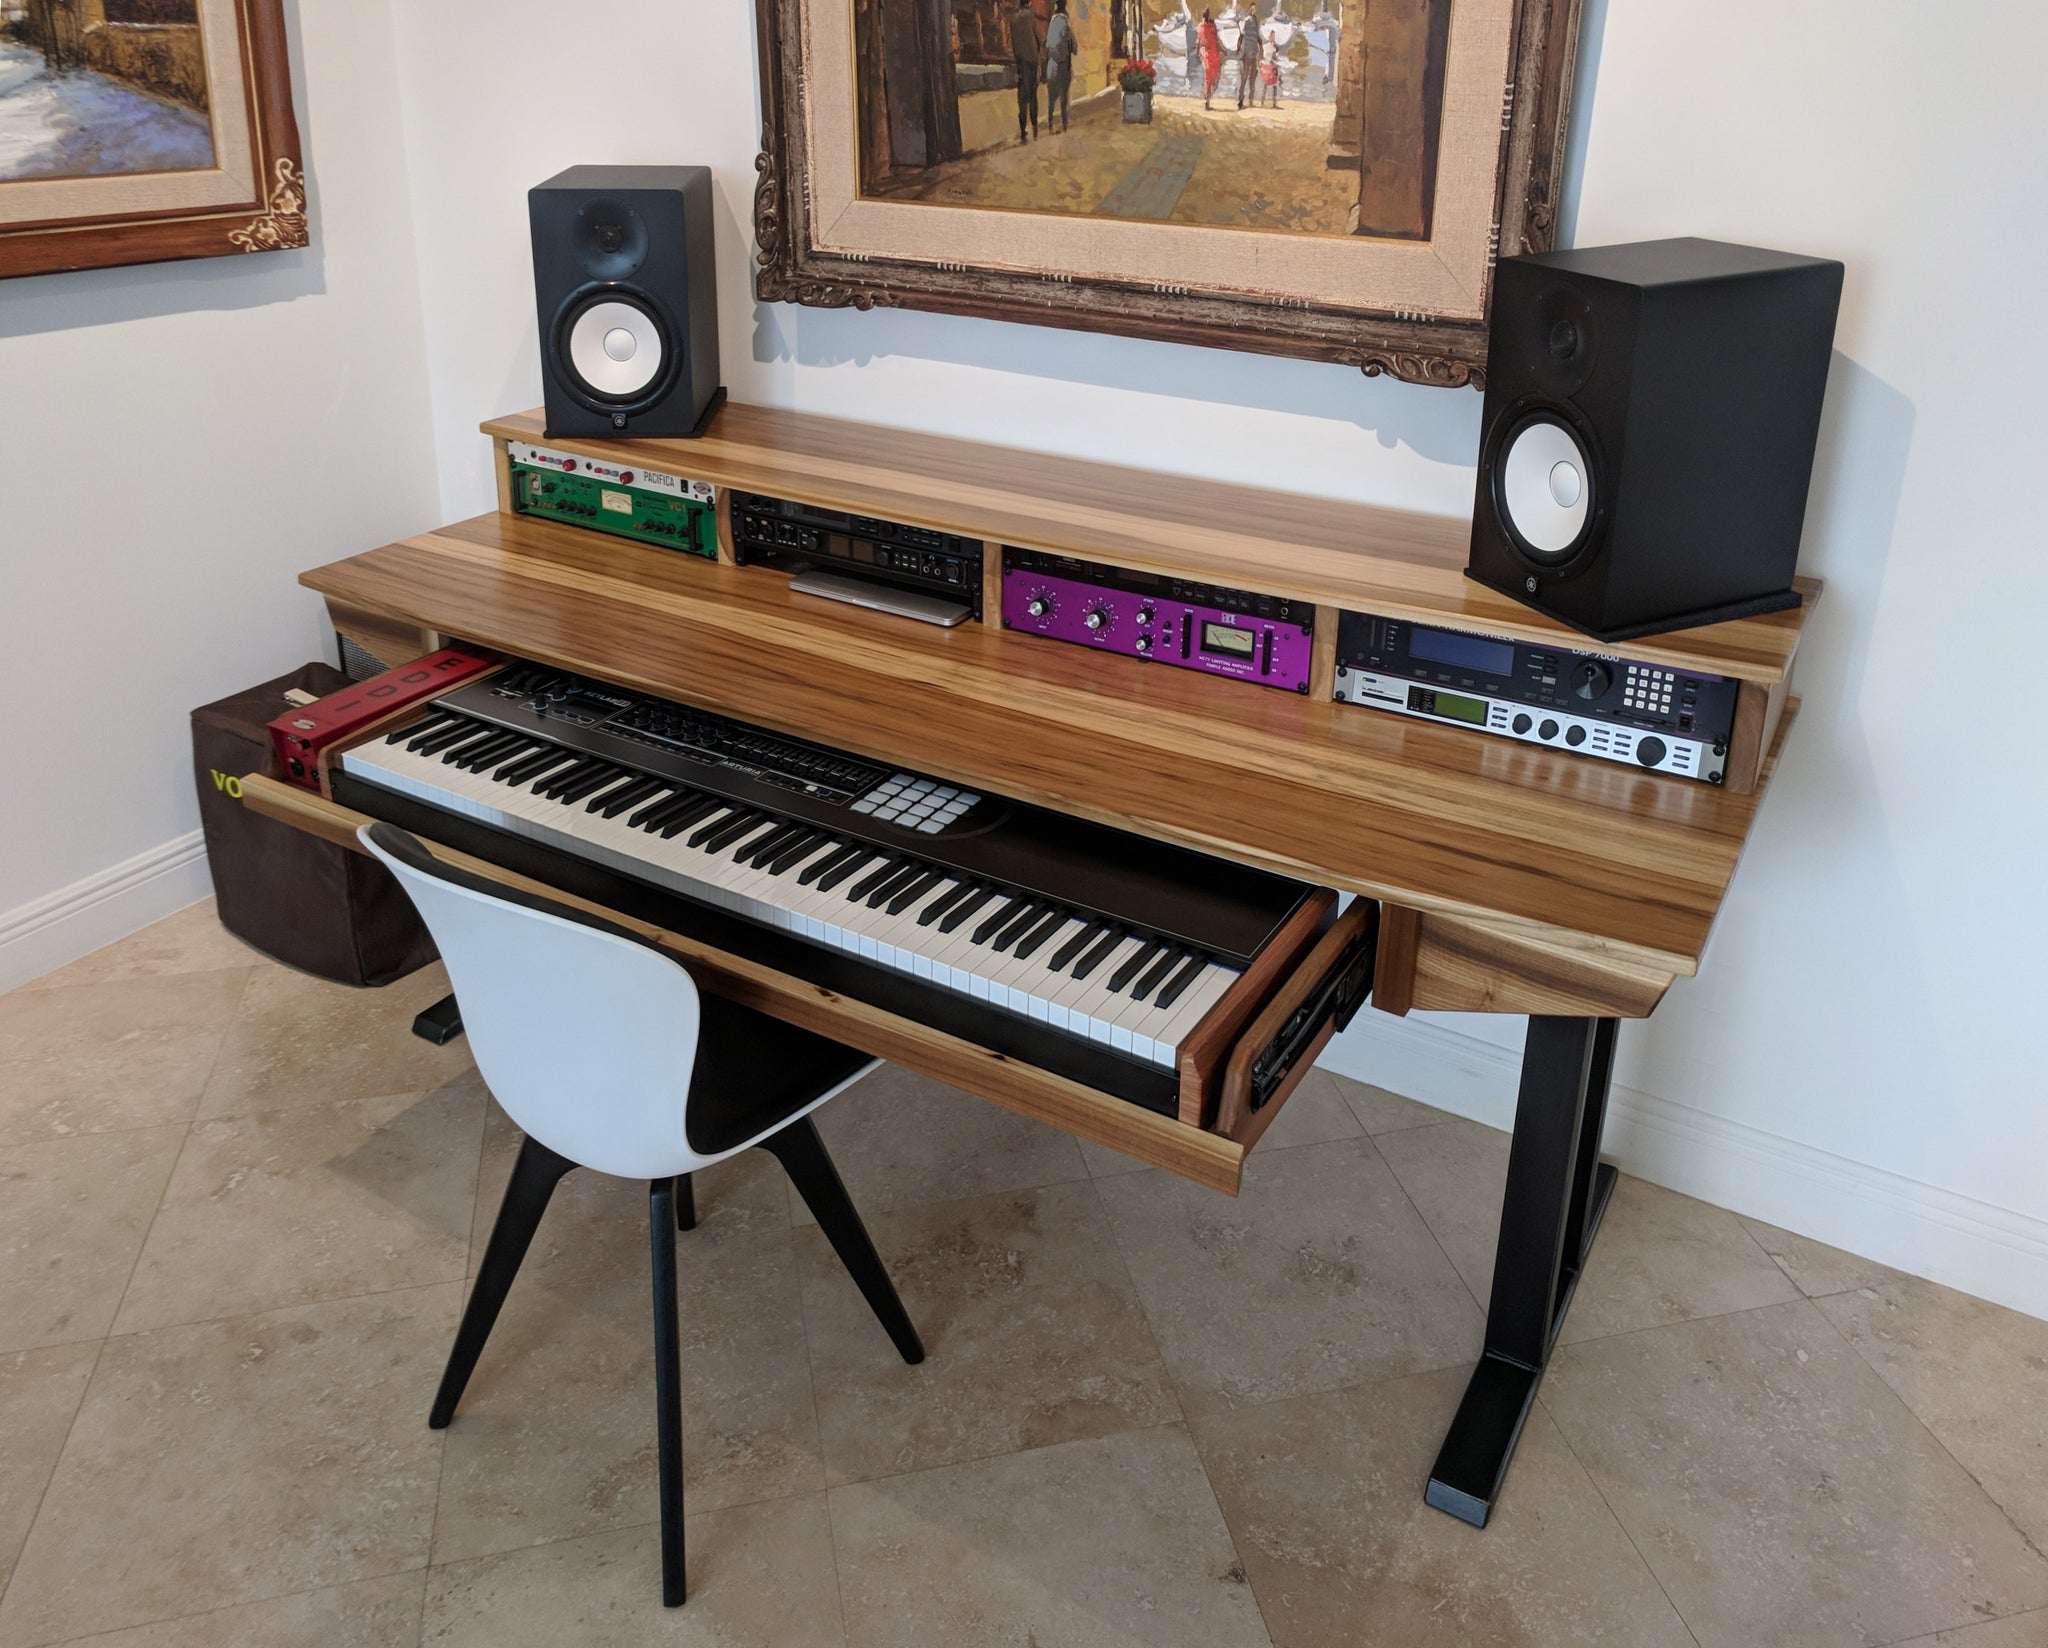 Monkwood SD88 Studio Desk for Audio / Video / Music / Film / Production